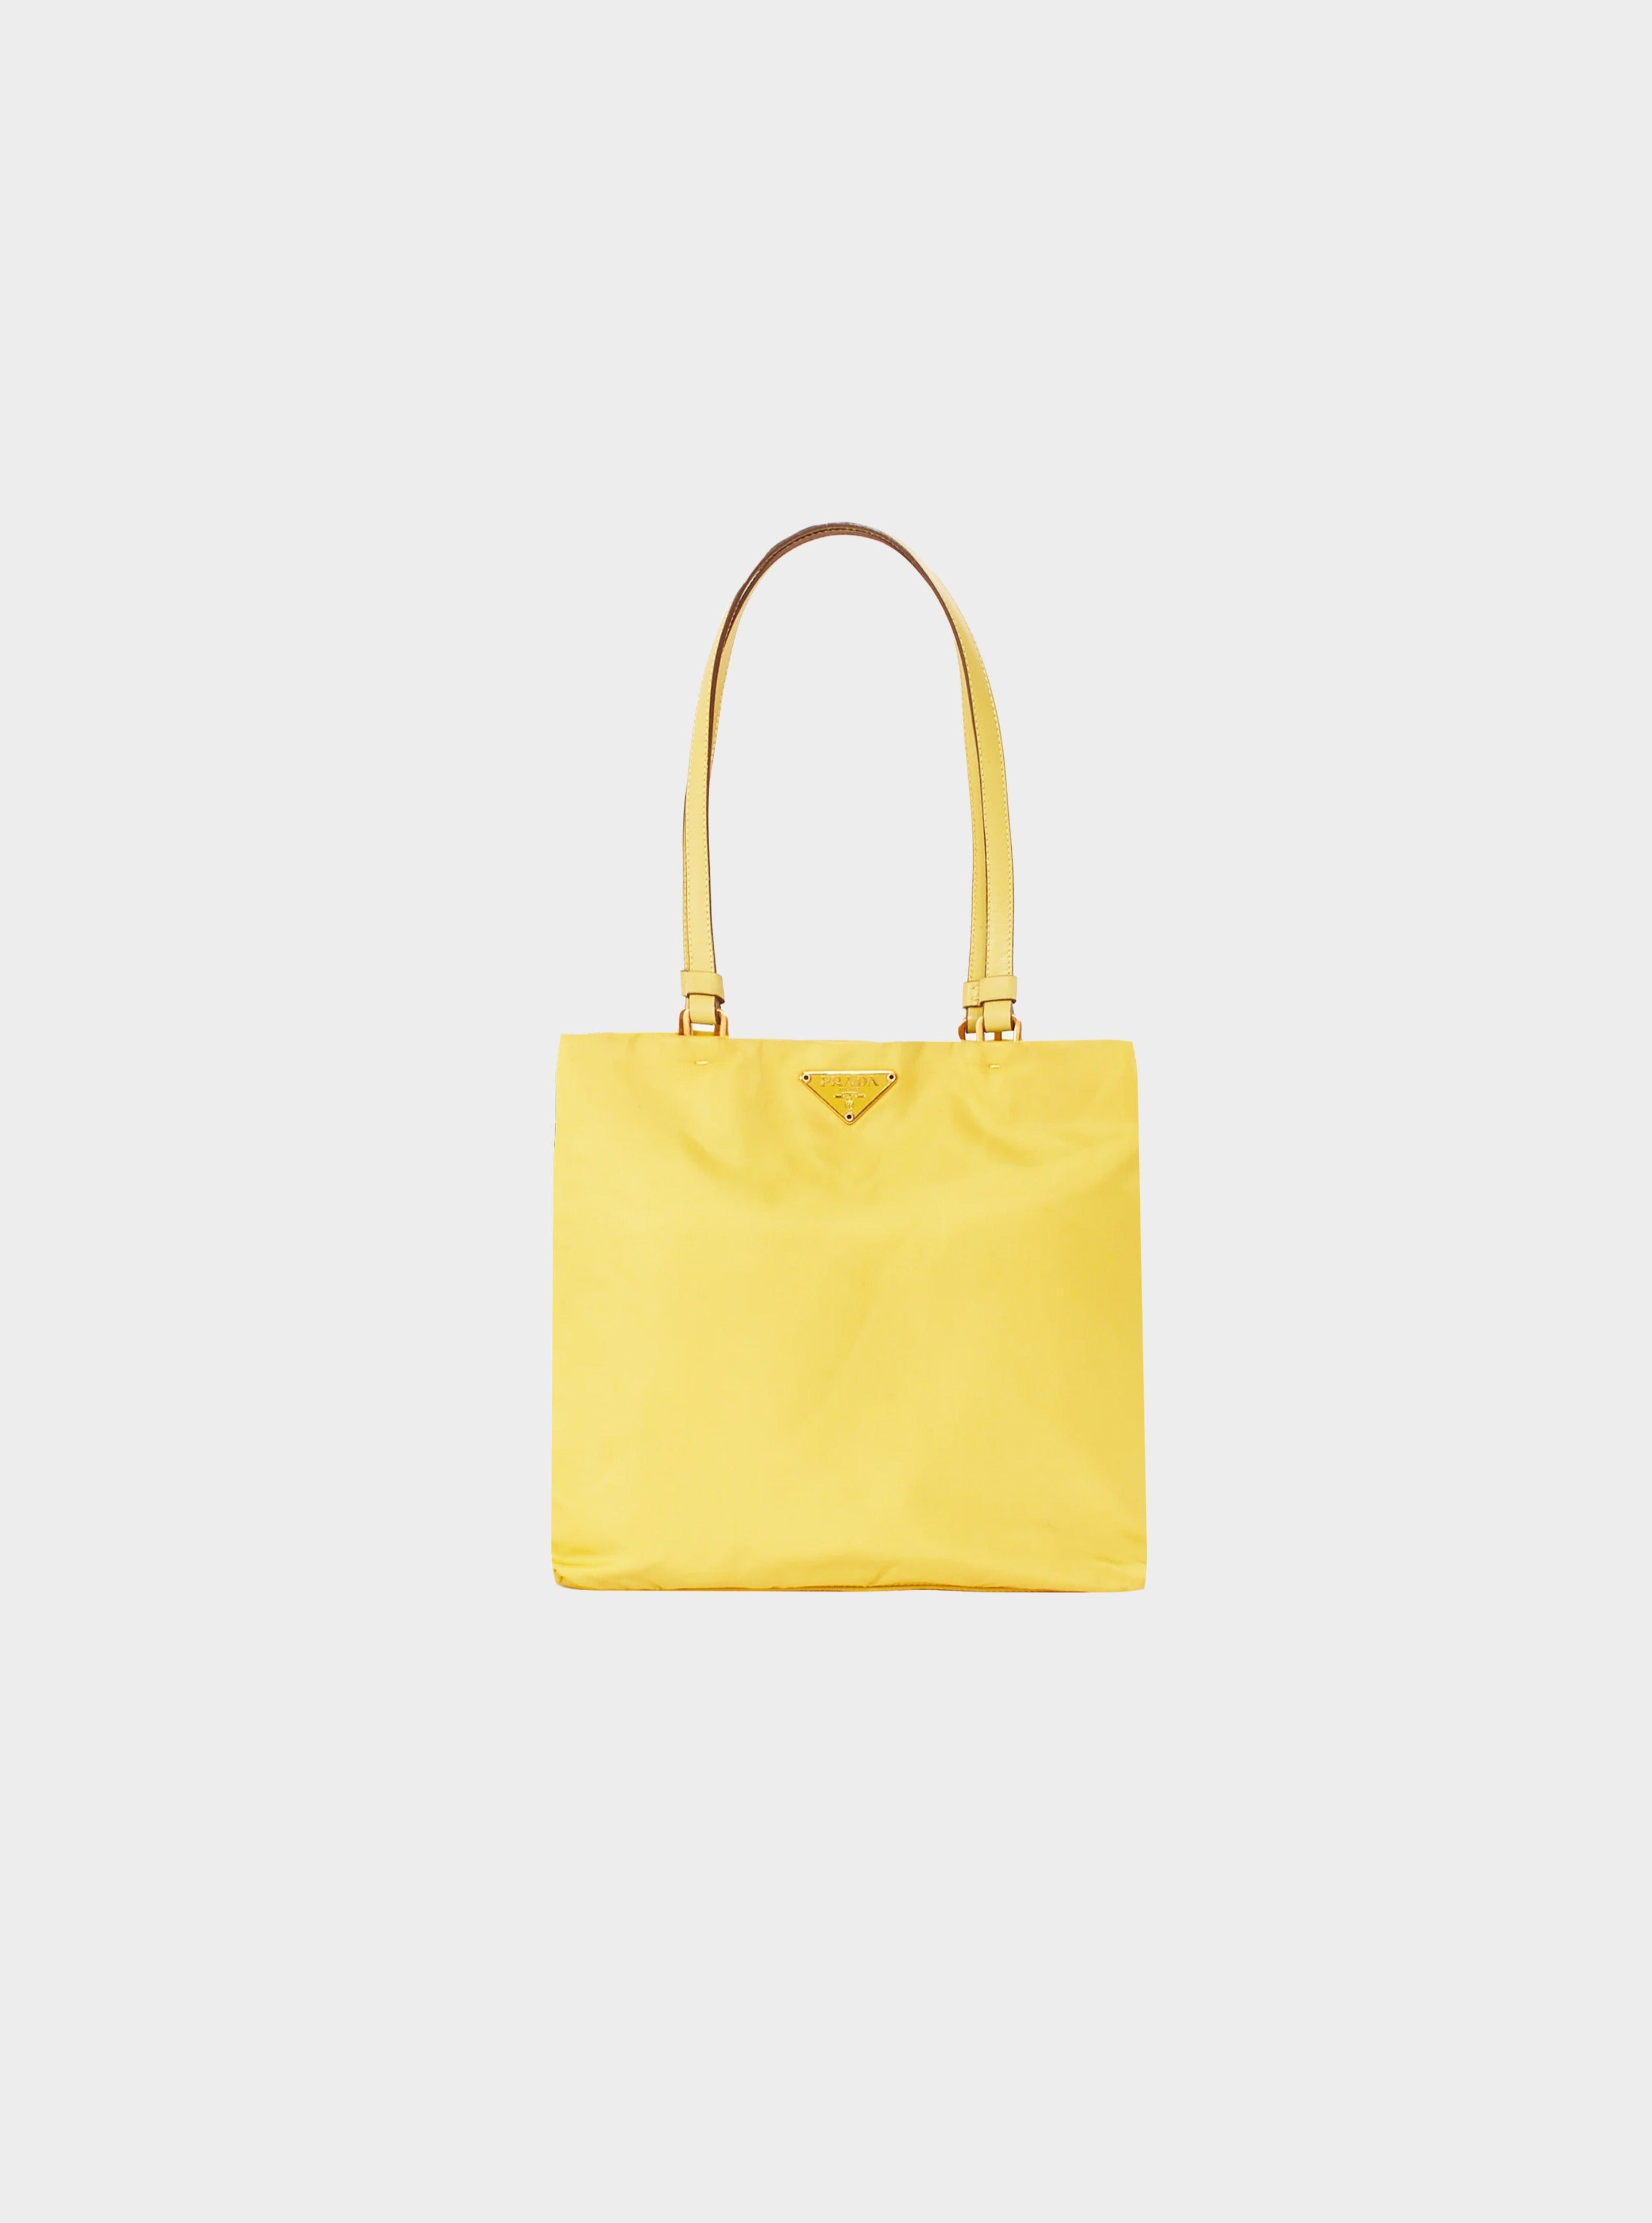 Sold at Auction: Prada Mustard Nylon Pochette Bag